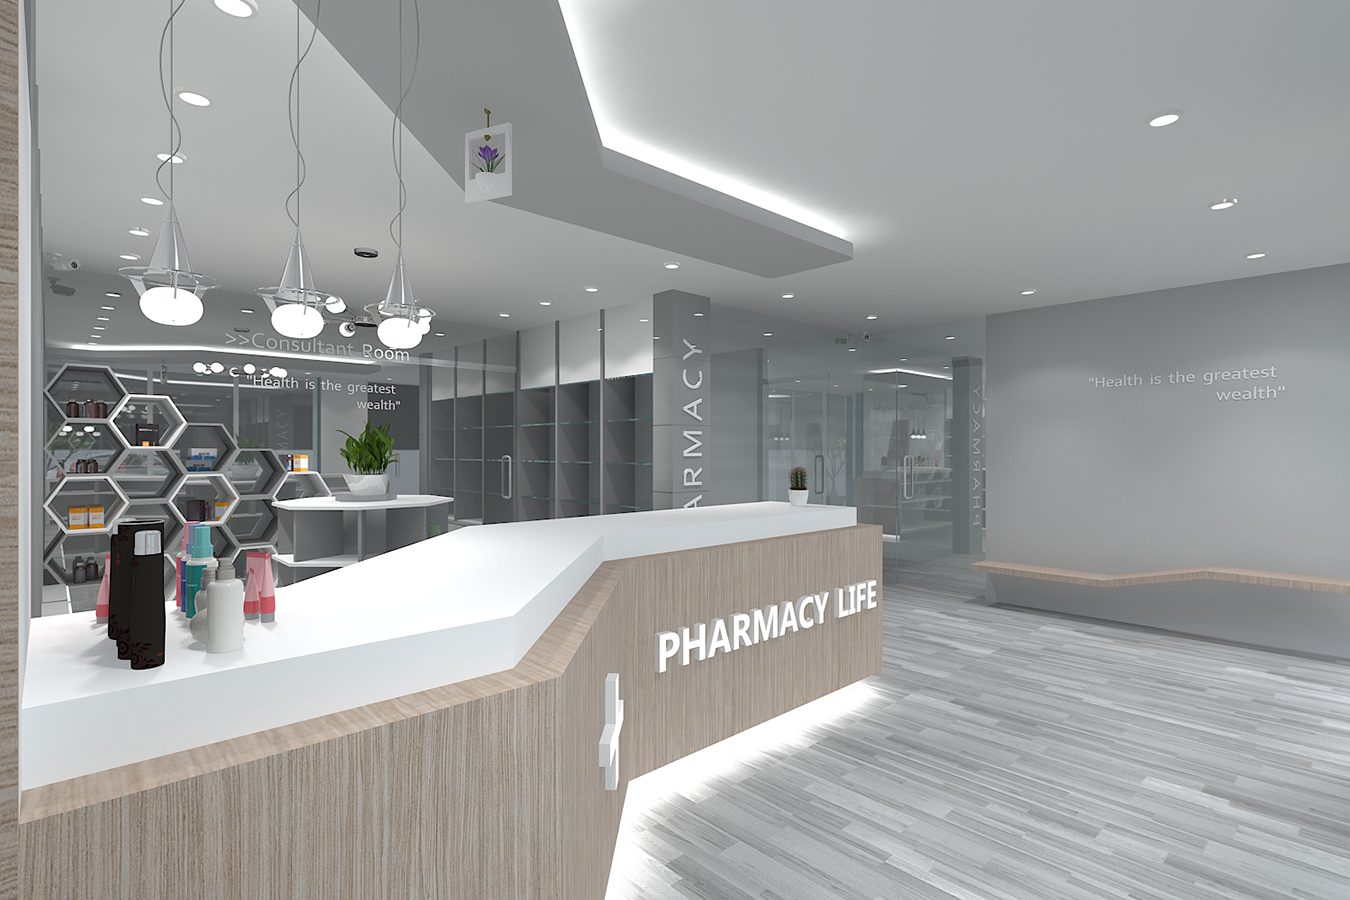 Pharmacy Life Interior Hospital Projects - Komnit Design